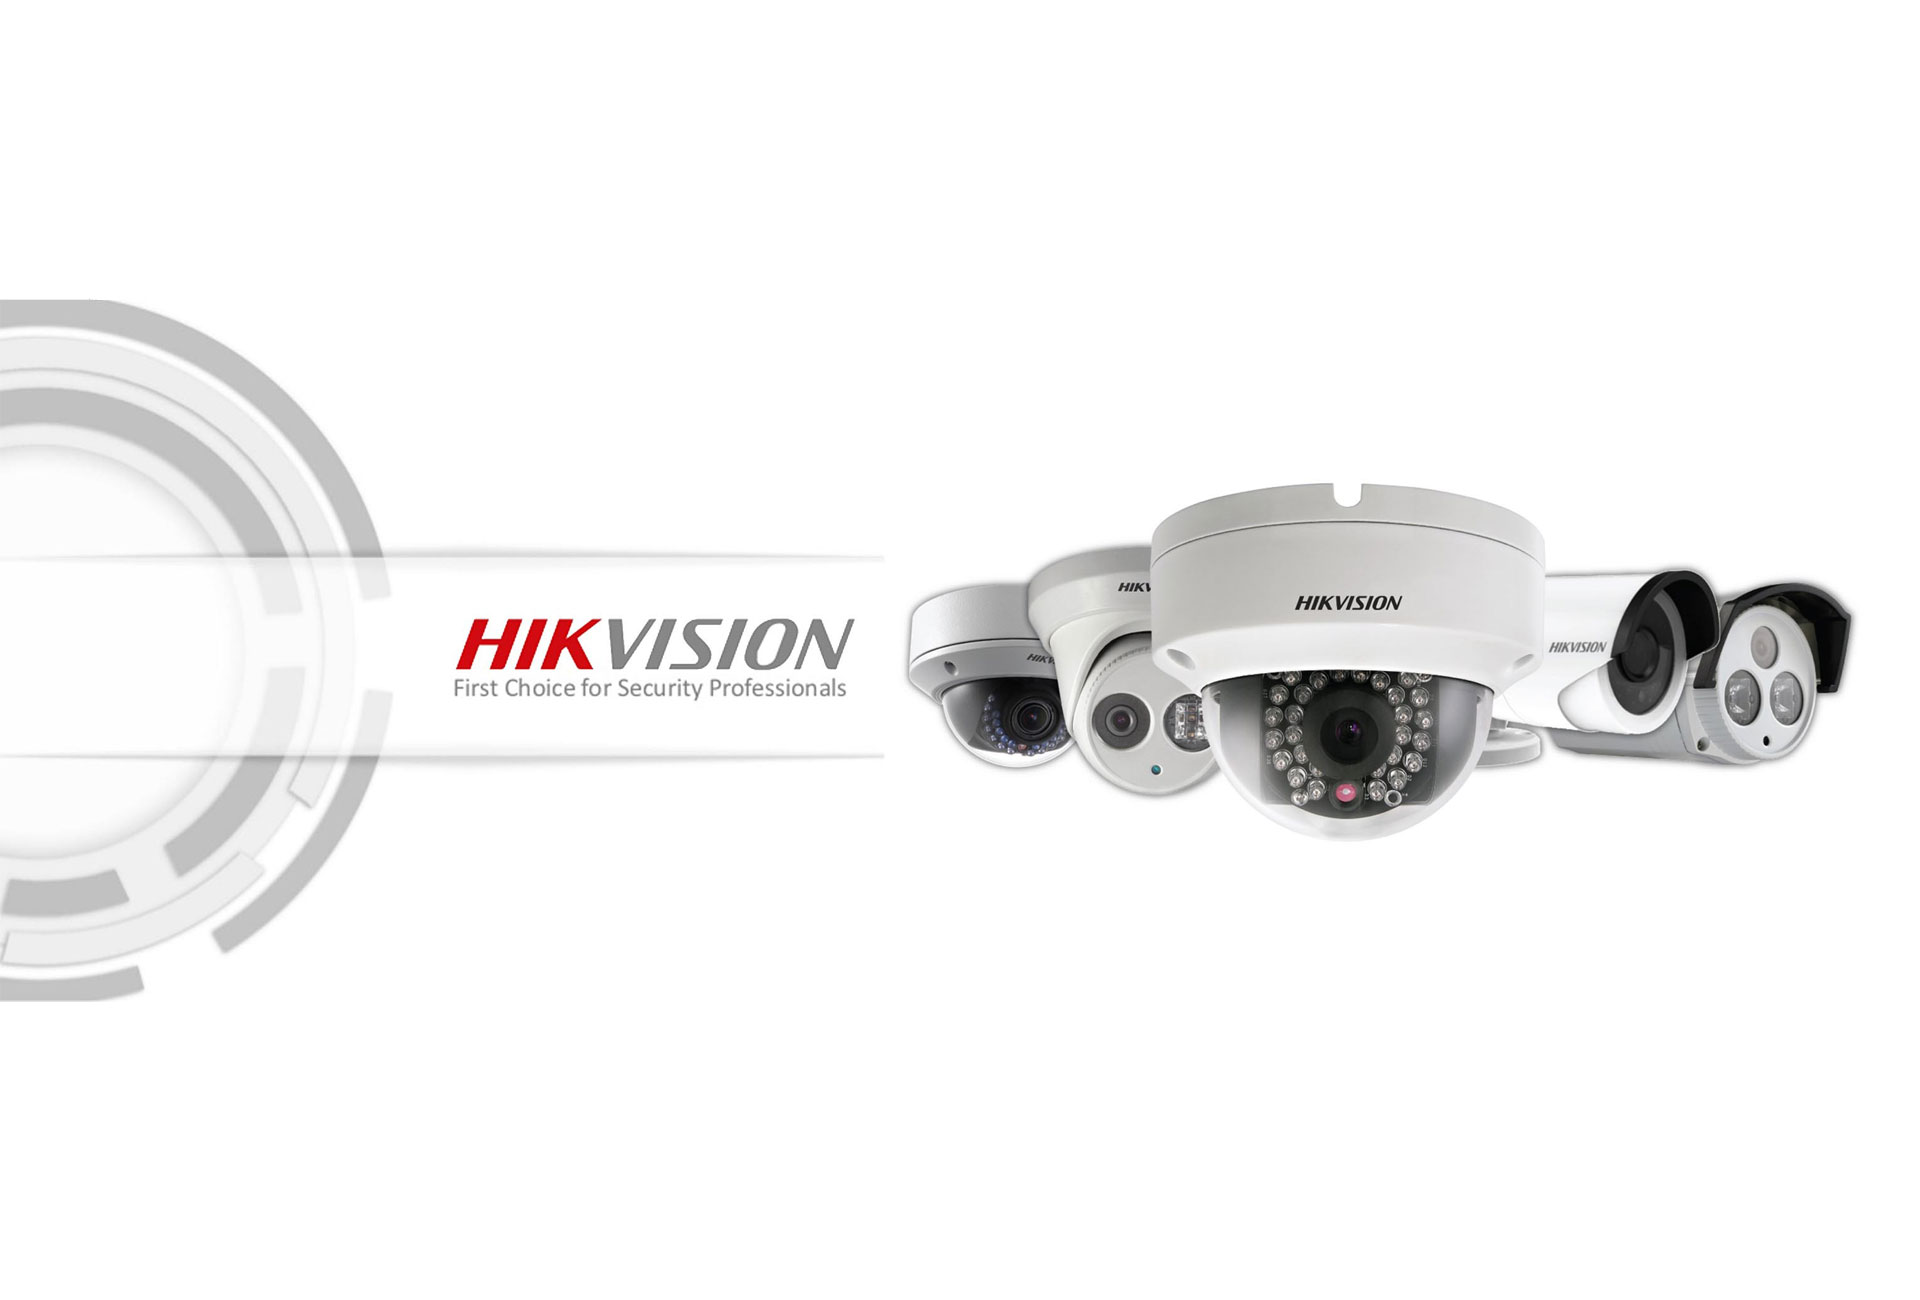 hikvision ip camera dealers in gurgaon and delhi